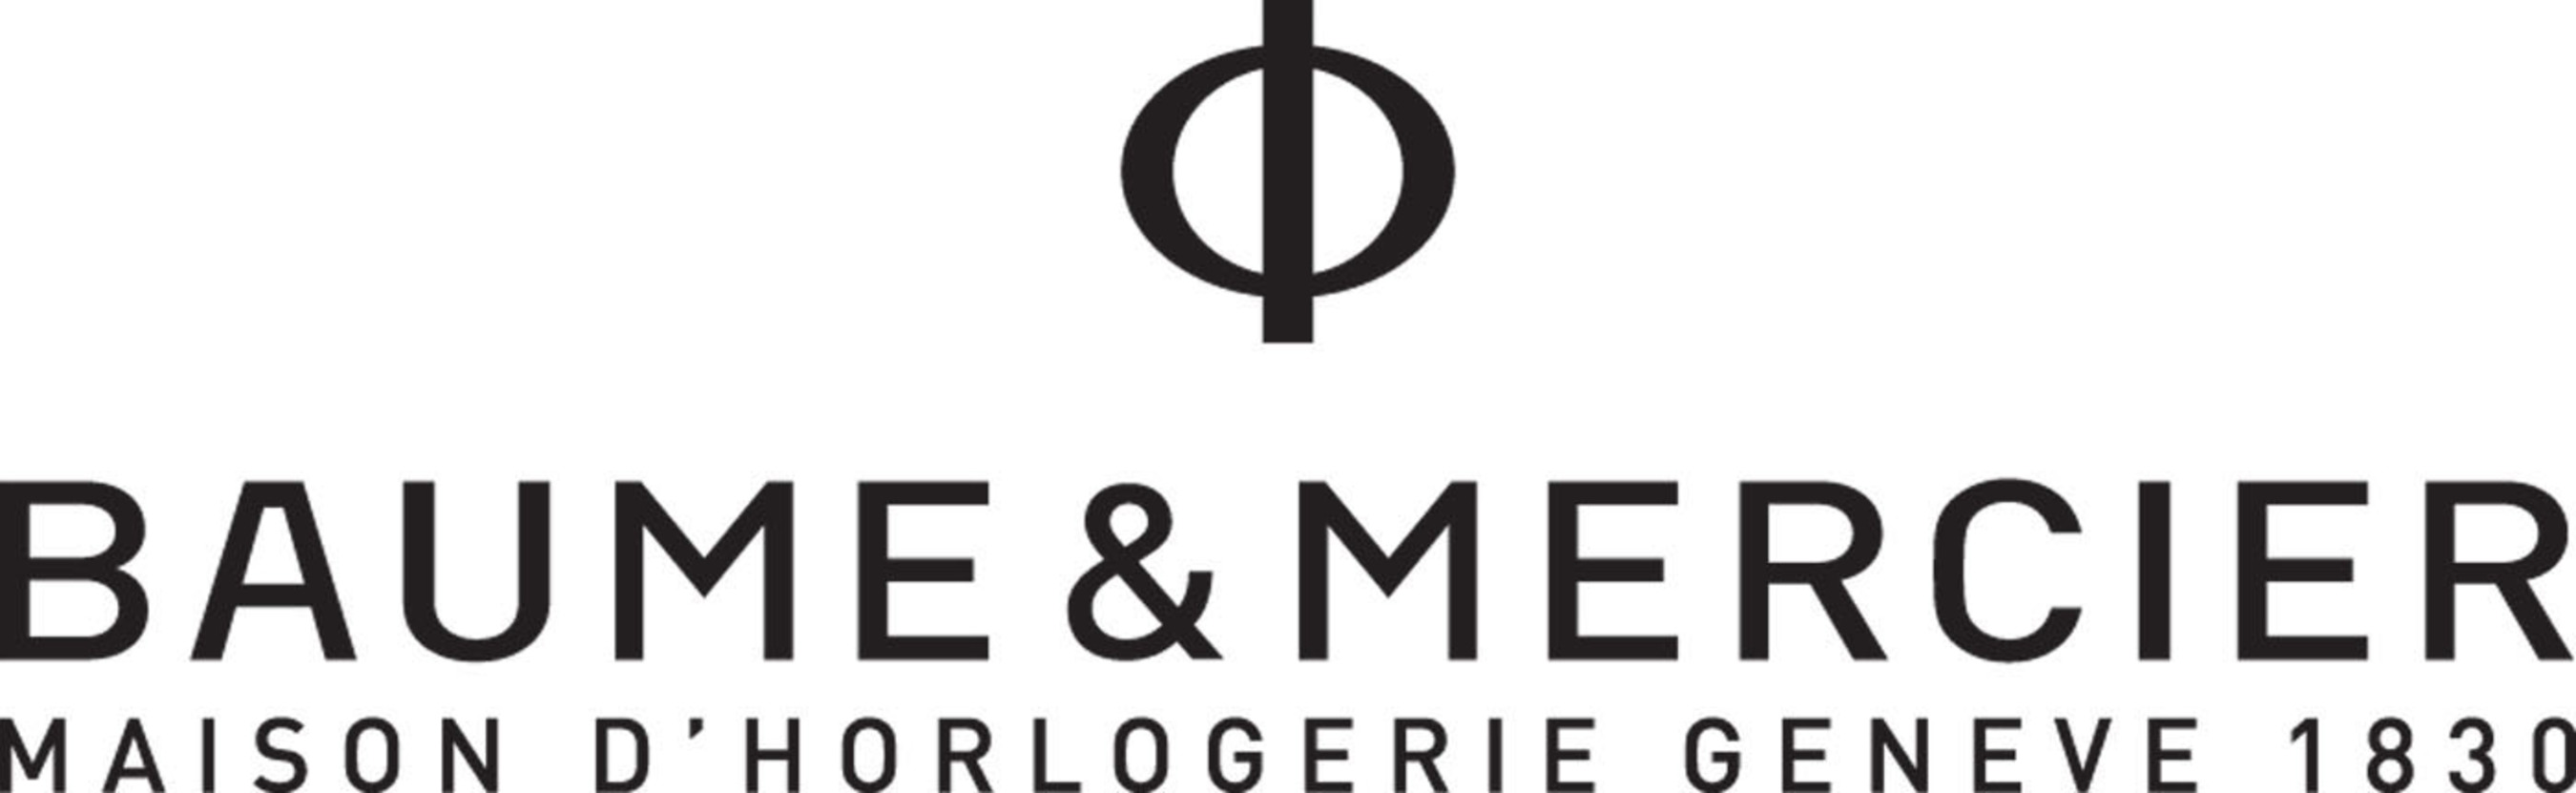 Baume & Mercier logo.